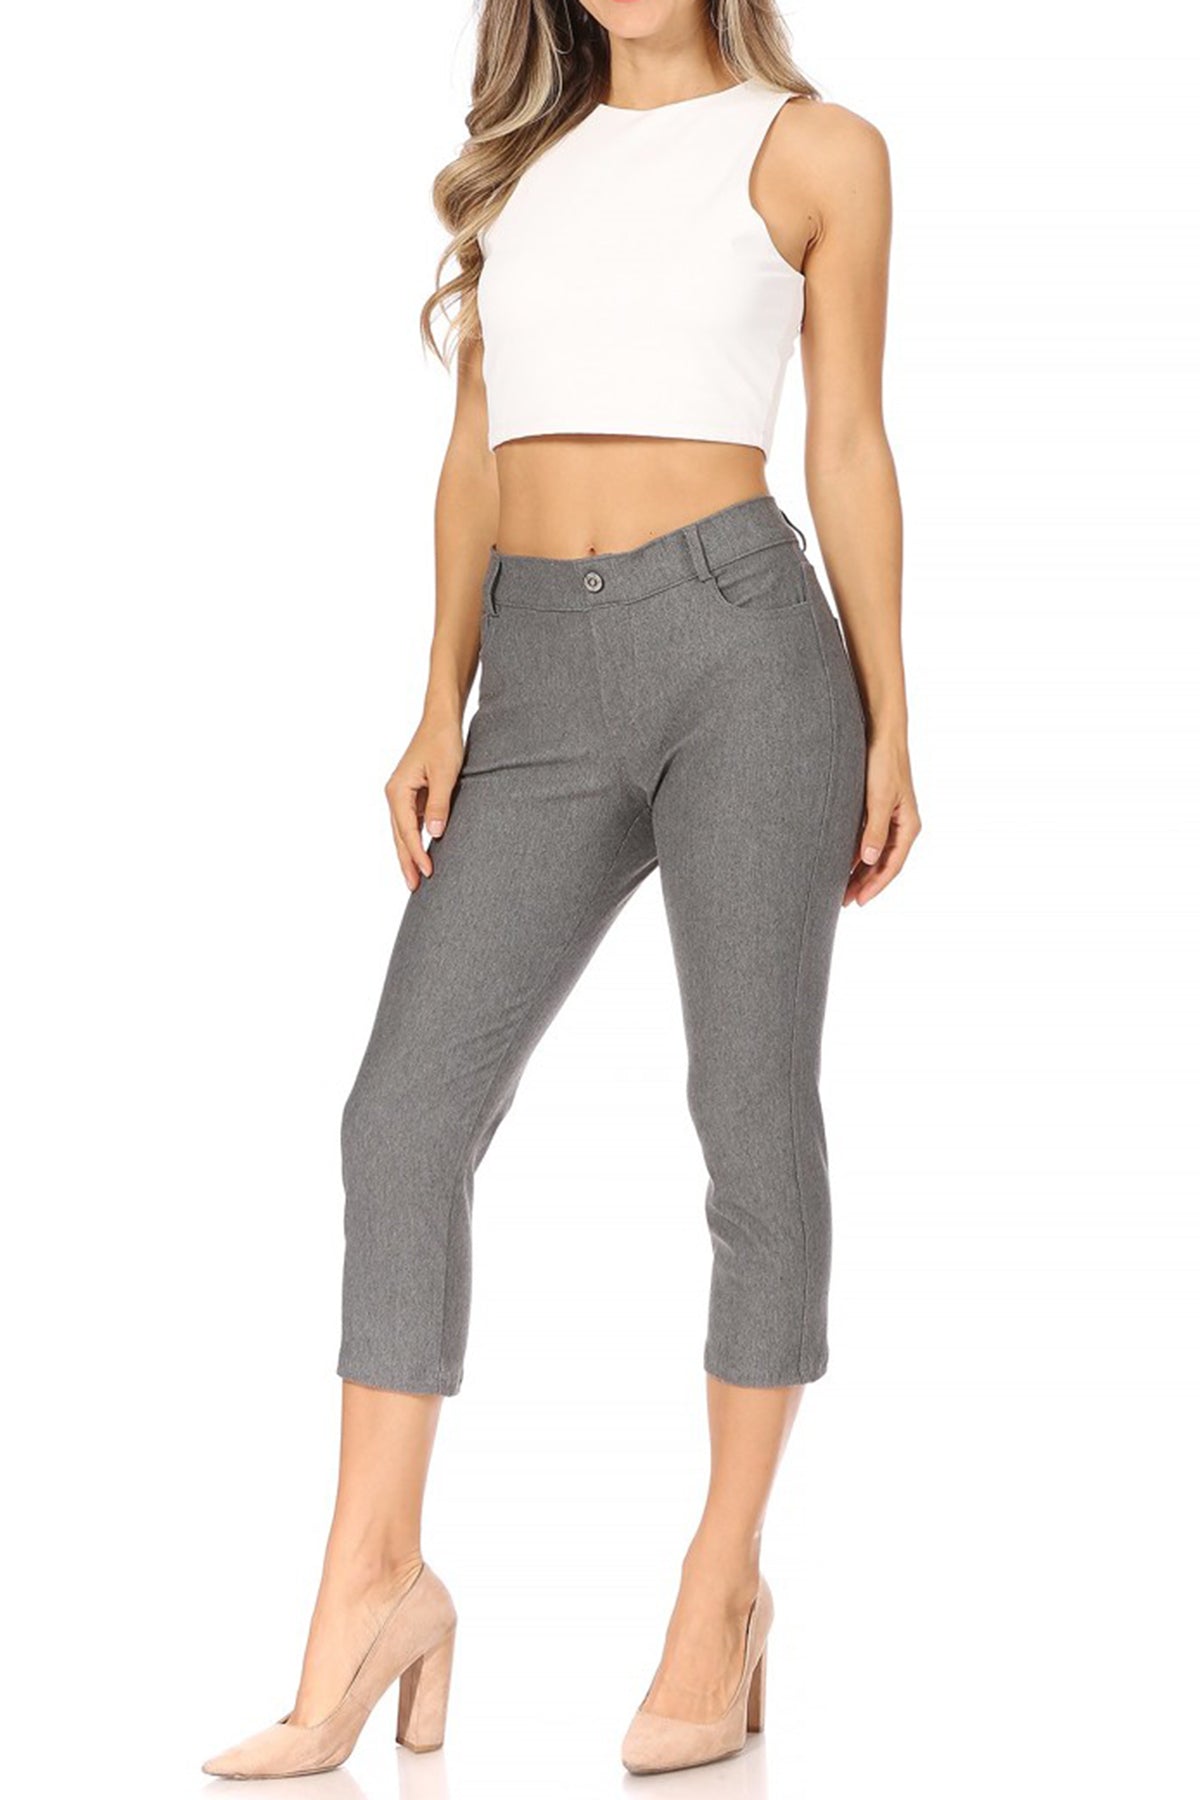 Women's Casual Comfy Slim Pocket Jeggings Jeans Capri Pants